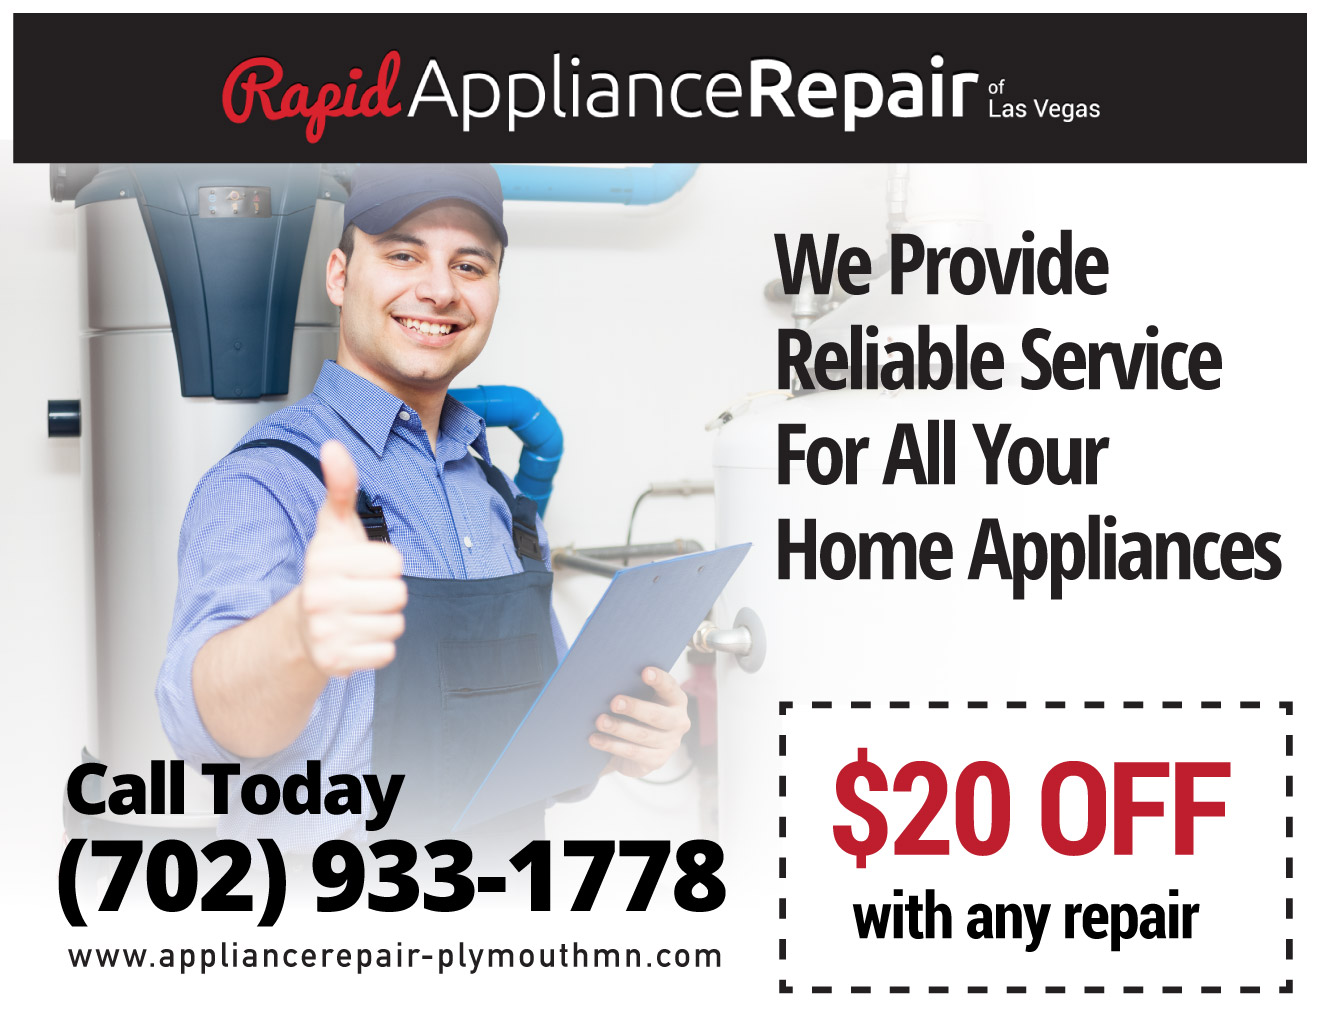 Rapid Appliance Repair of Las Vegas